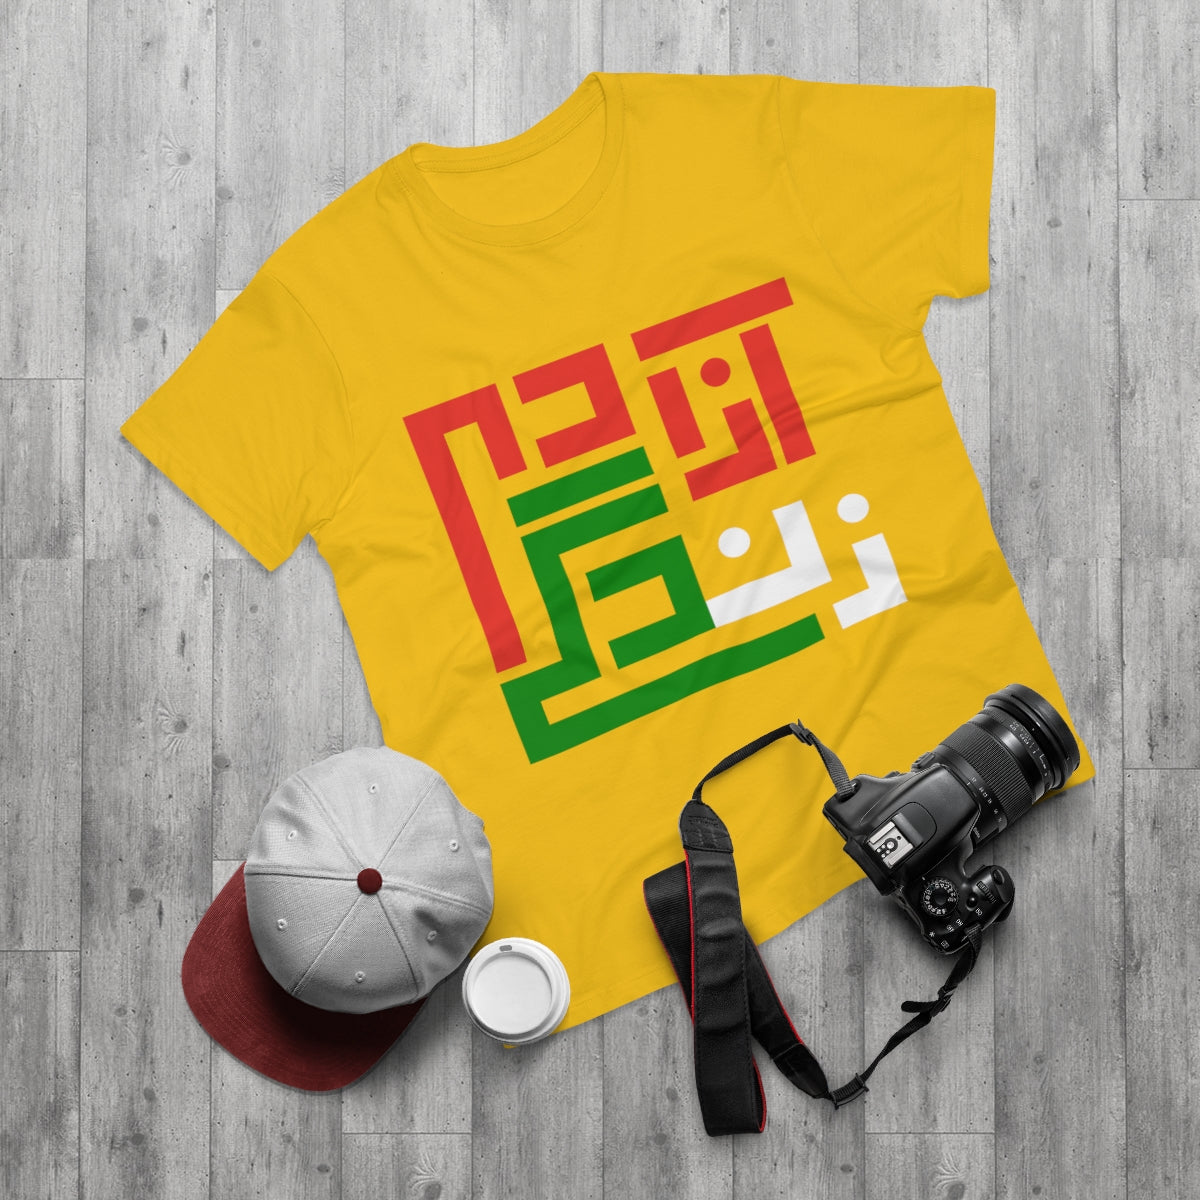 Zan Zendegi Azadi - Men's T-shirt - MAHSAAMINI - Iran Freedom